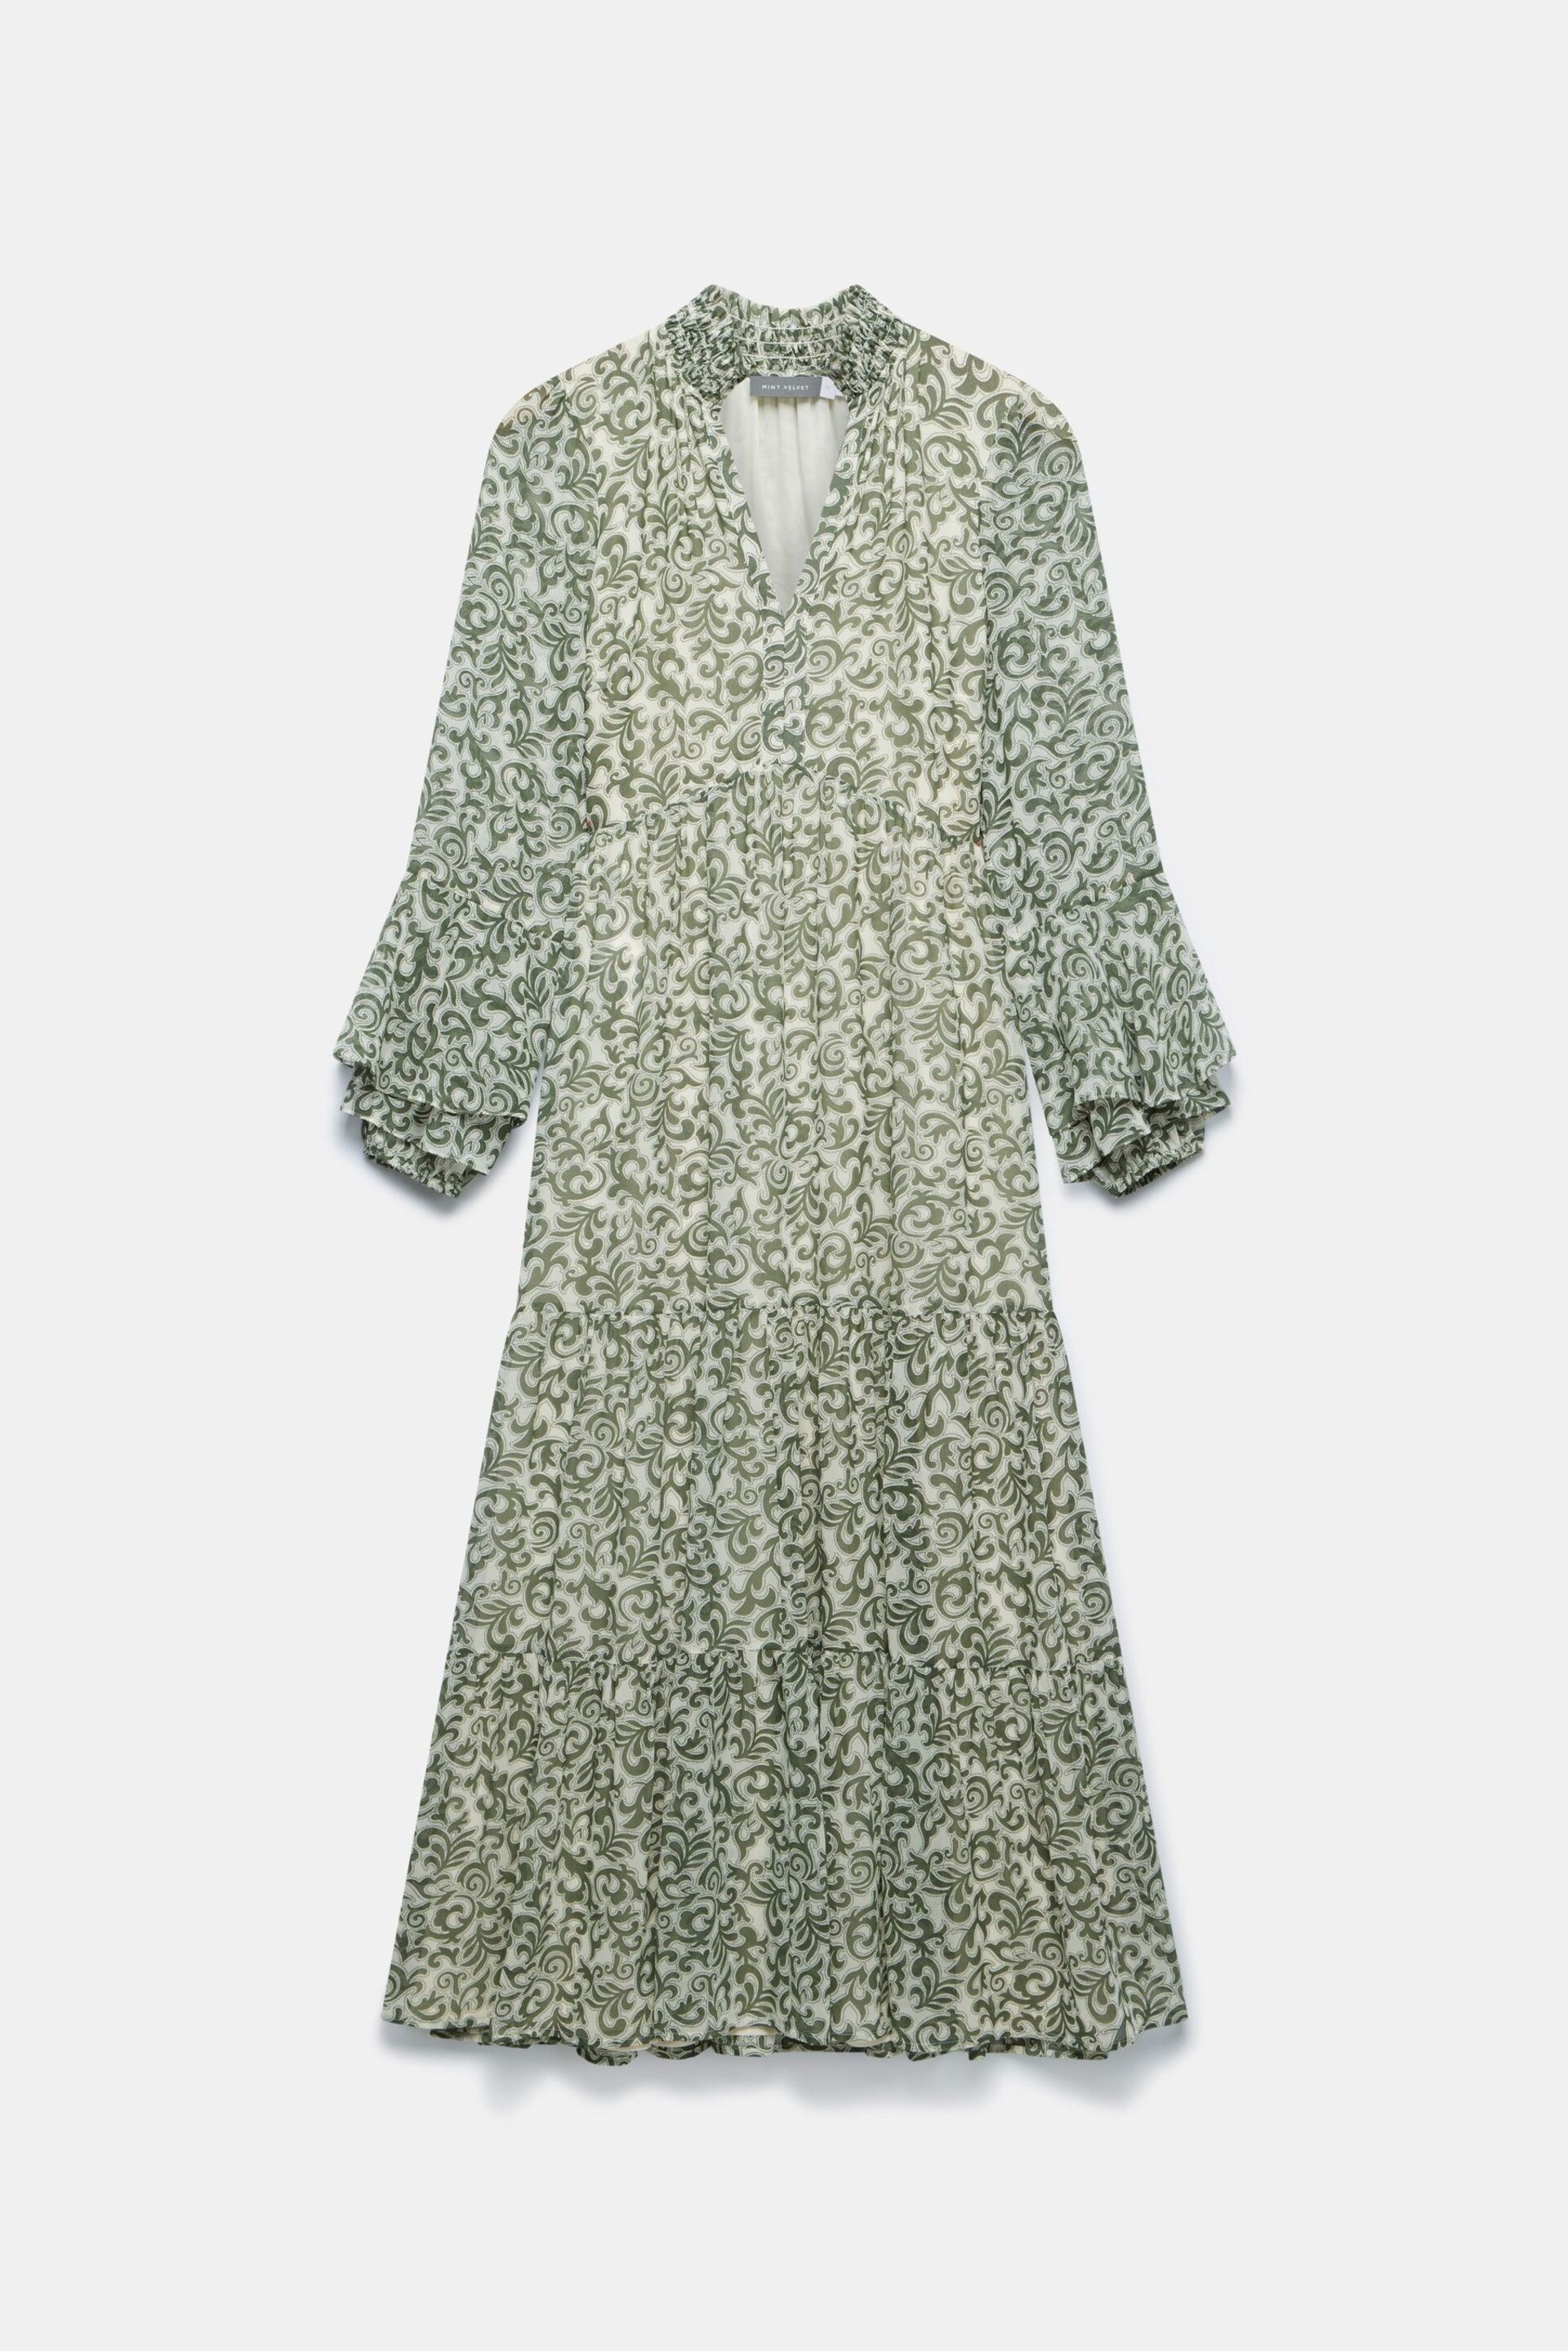 Mint Velvet Green Floral Print Maxi Dress - Image 3 of 4